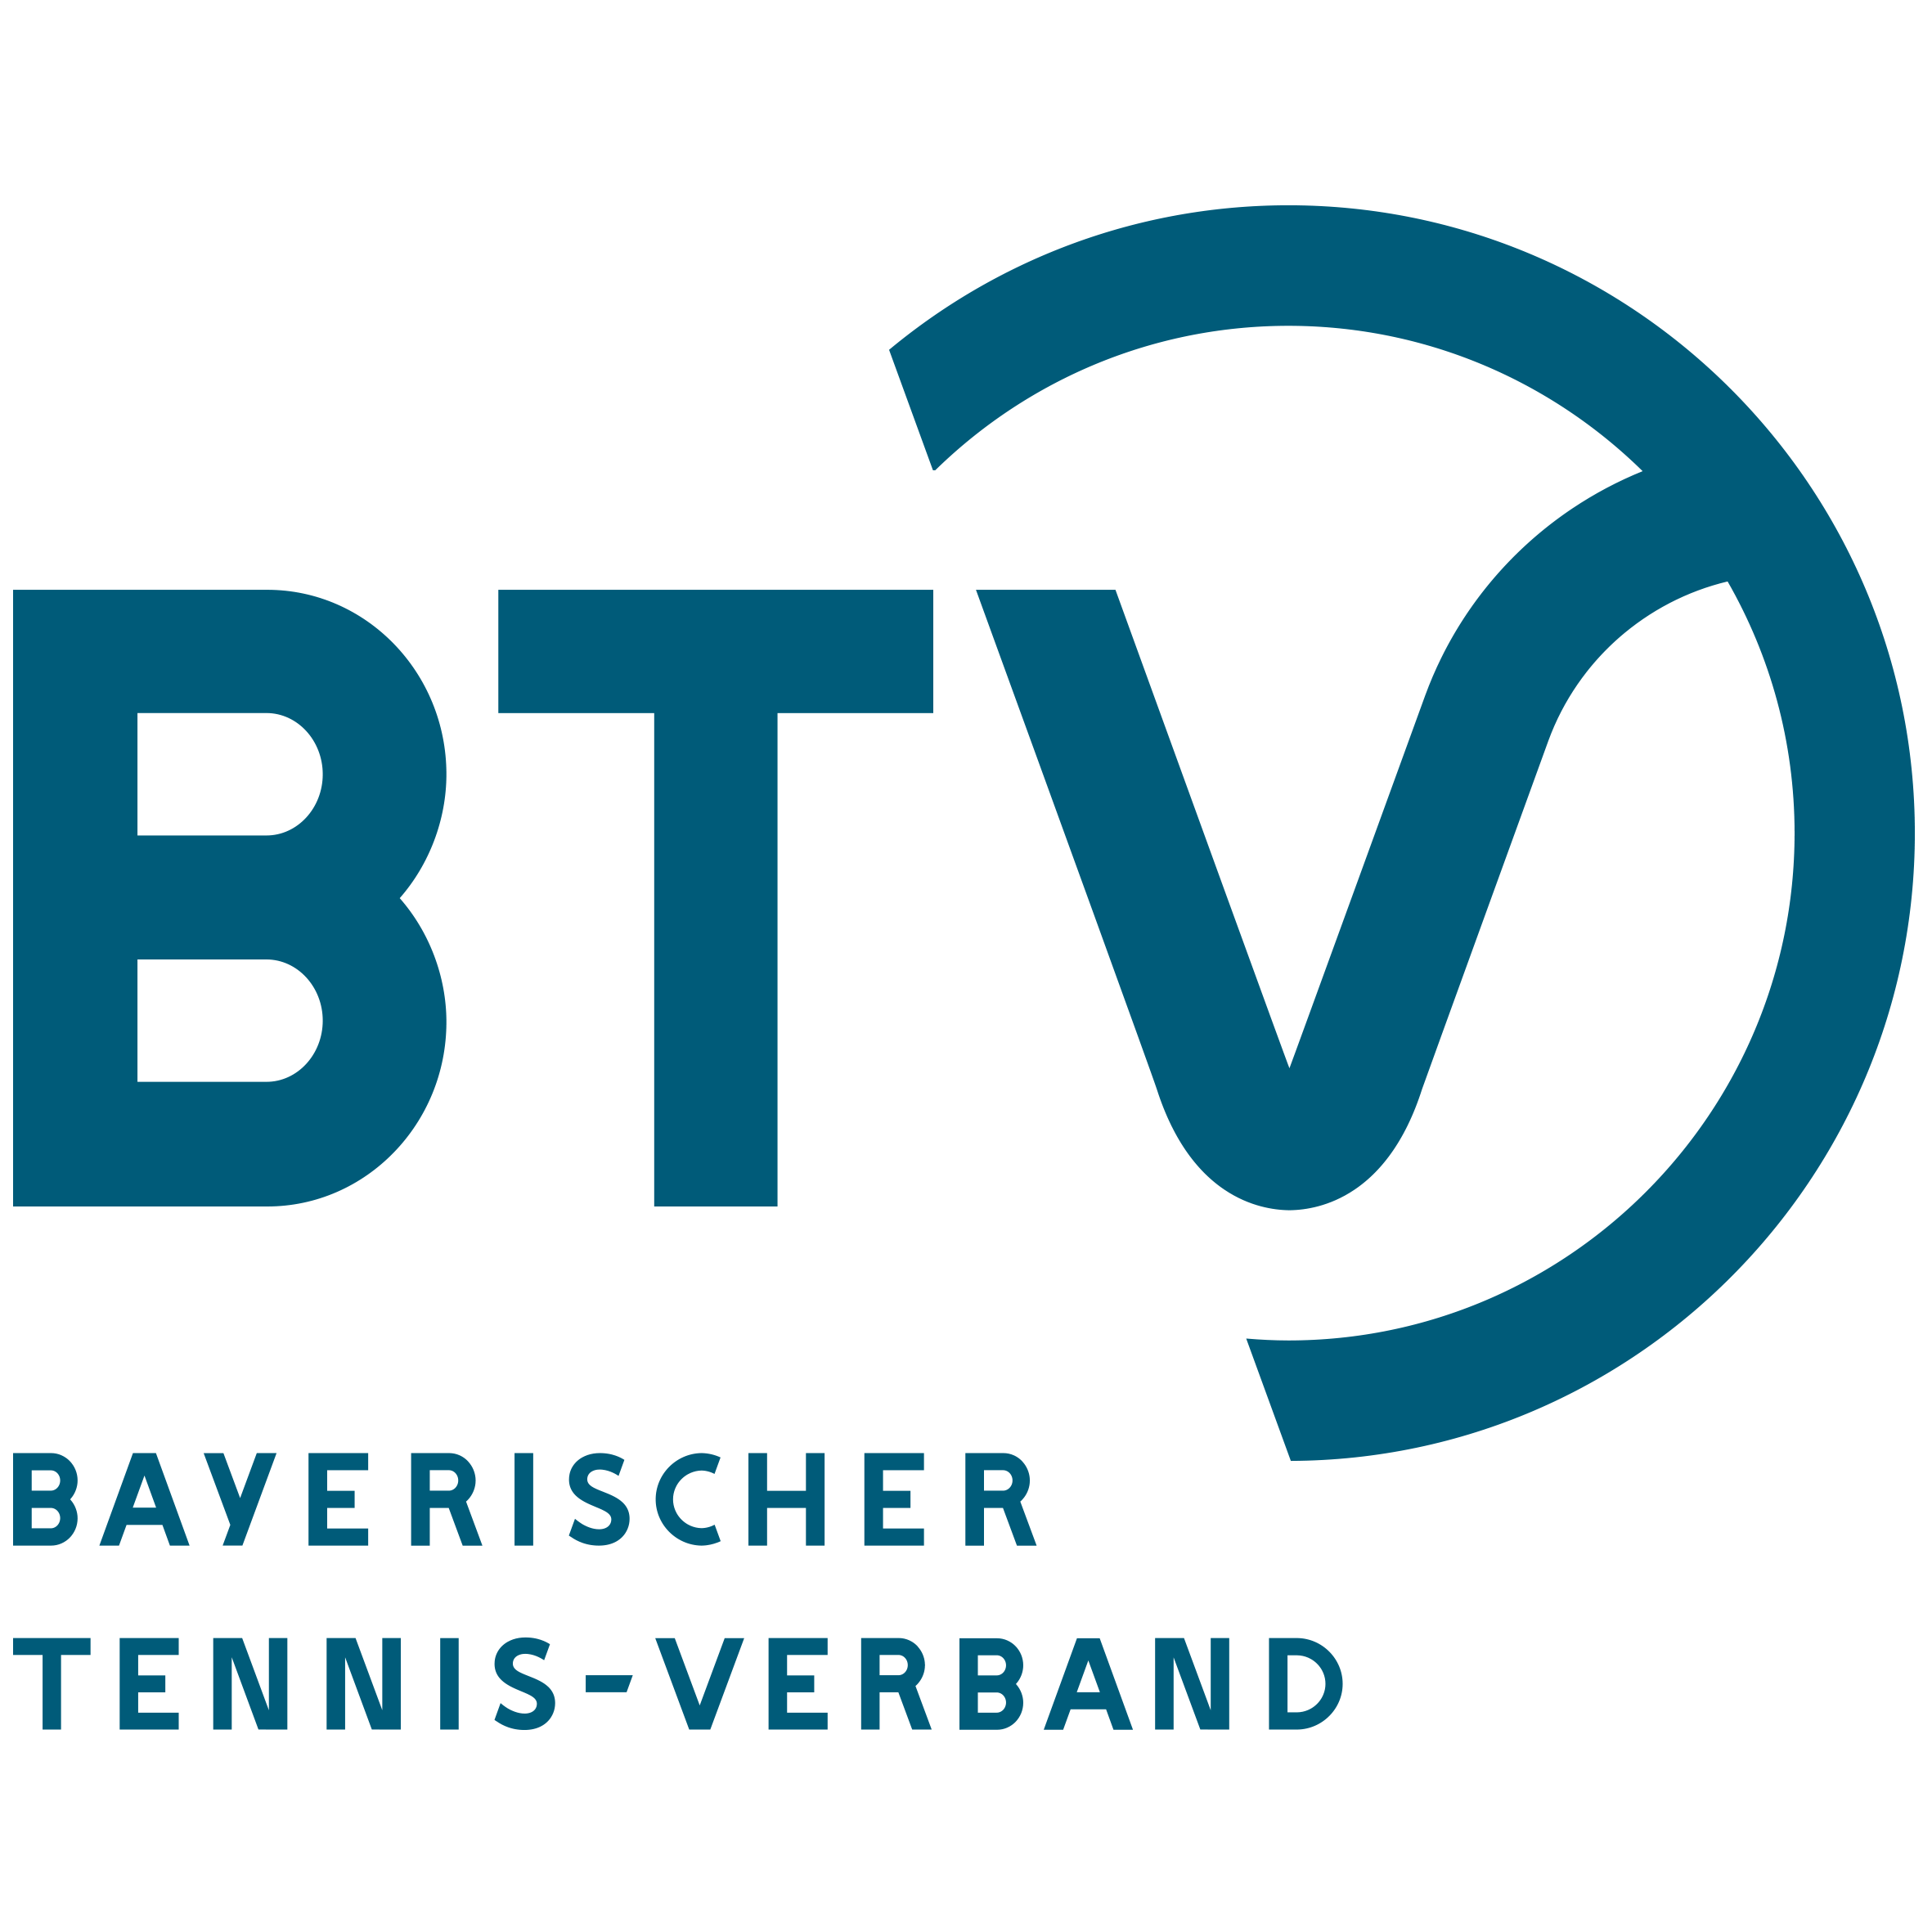 2018 btv logo quer